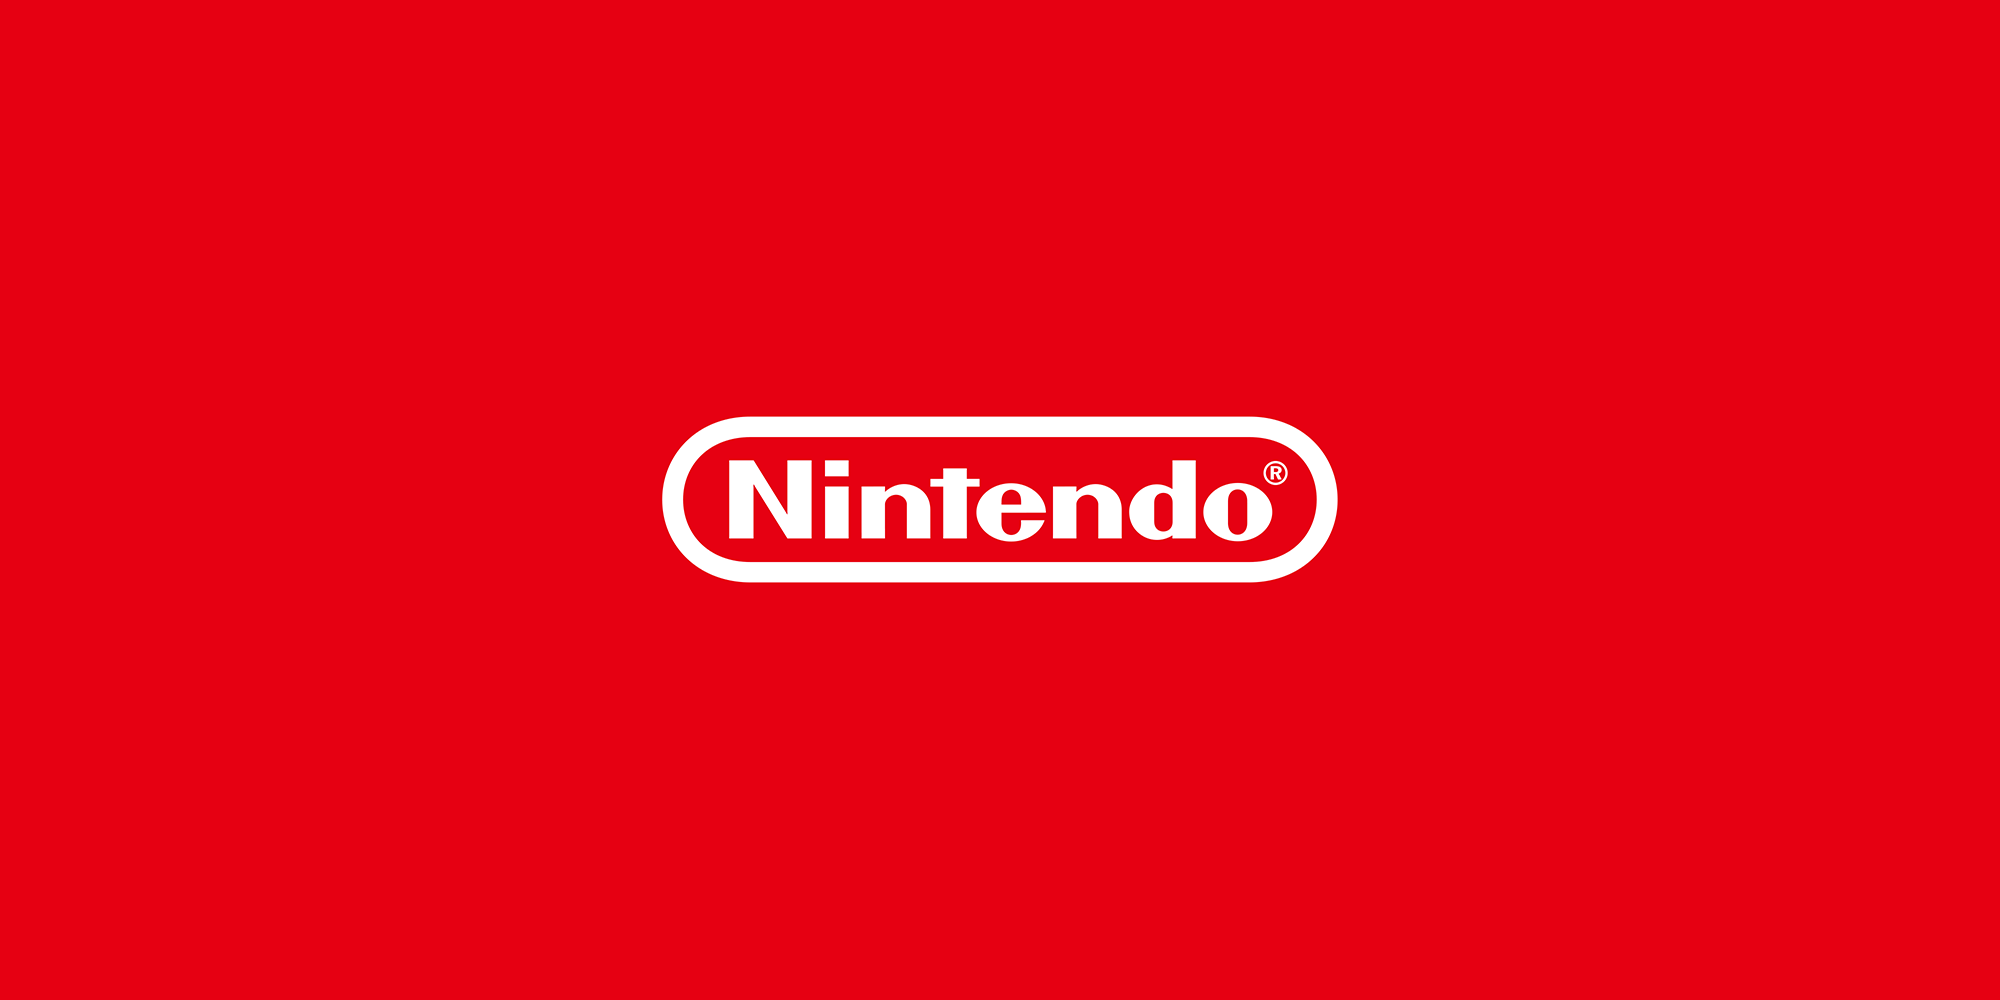 Nintendo DS Logo - Nintendo UK's official site